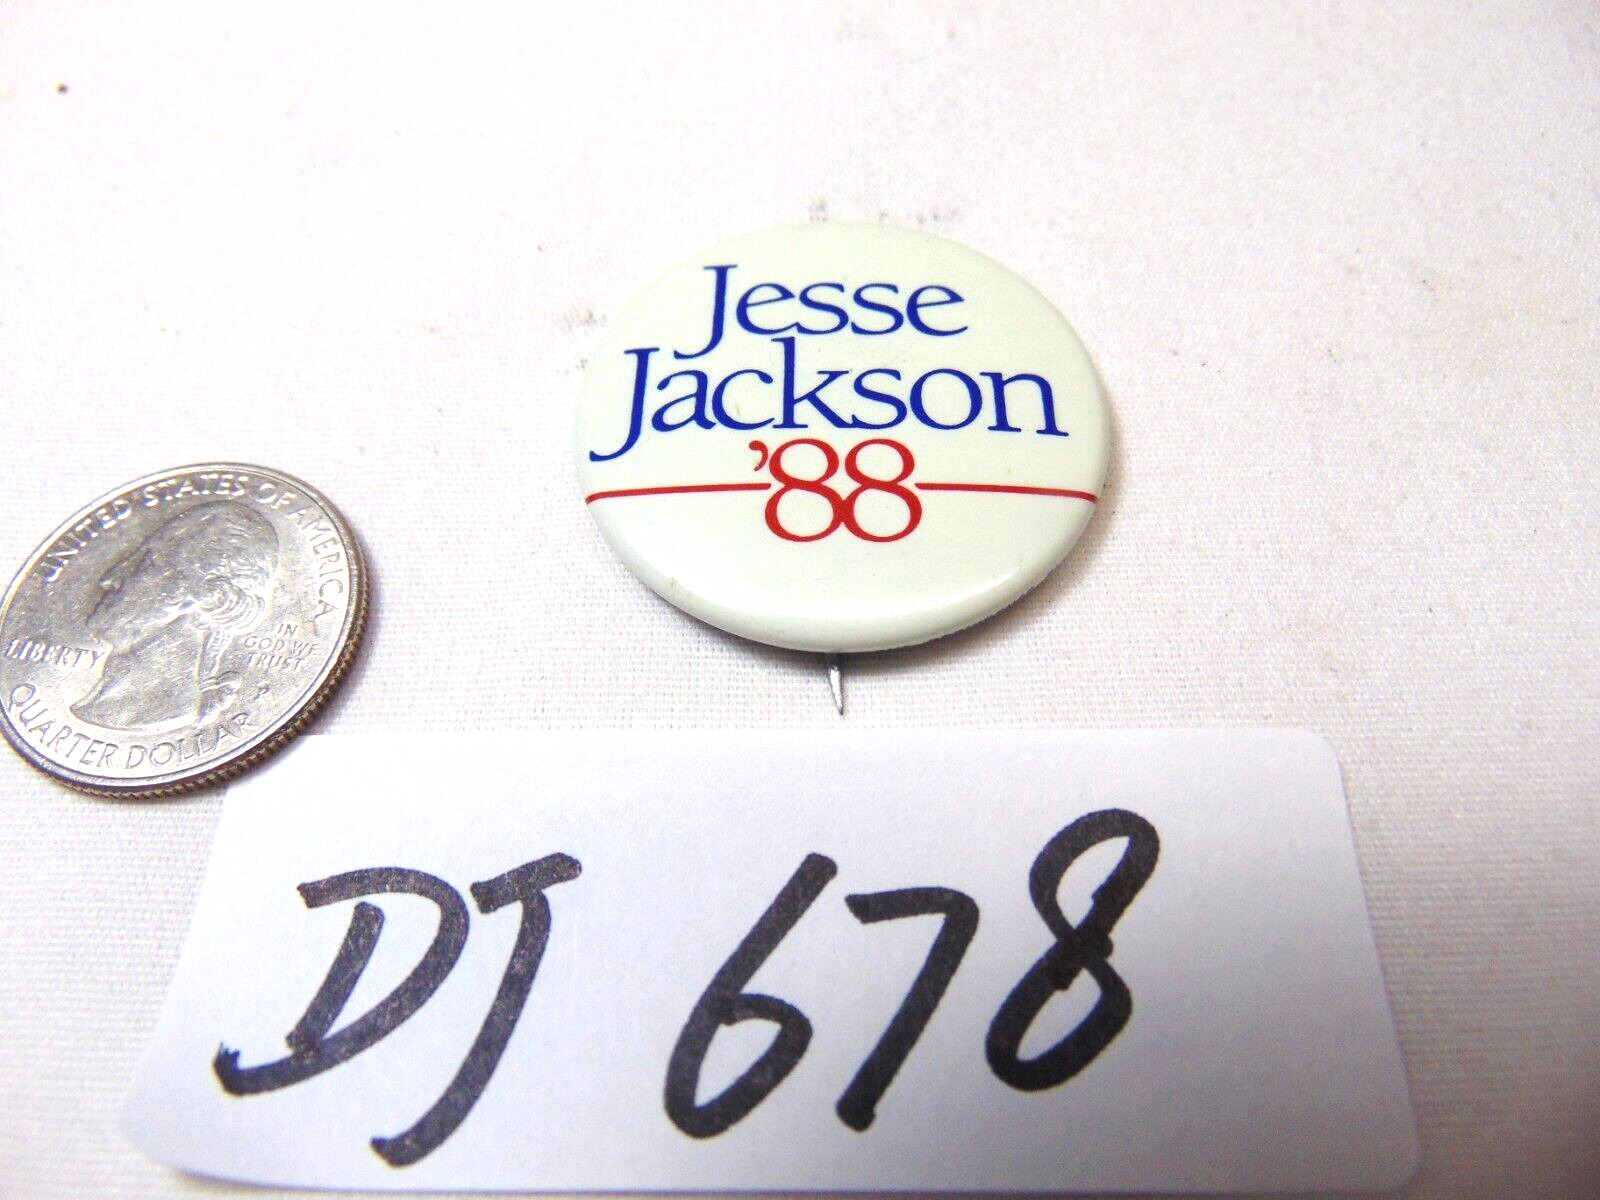 1988 JESSE JACKSON PRESIDENTIAL CAMPAIGN PIN PINBACK BUTTON POLITICAL ELECTION